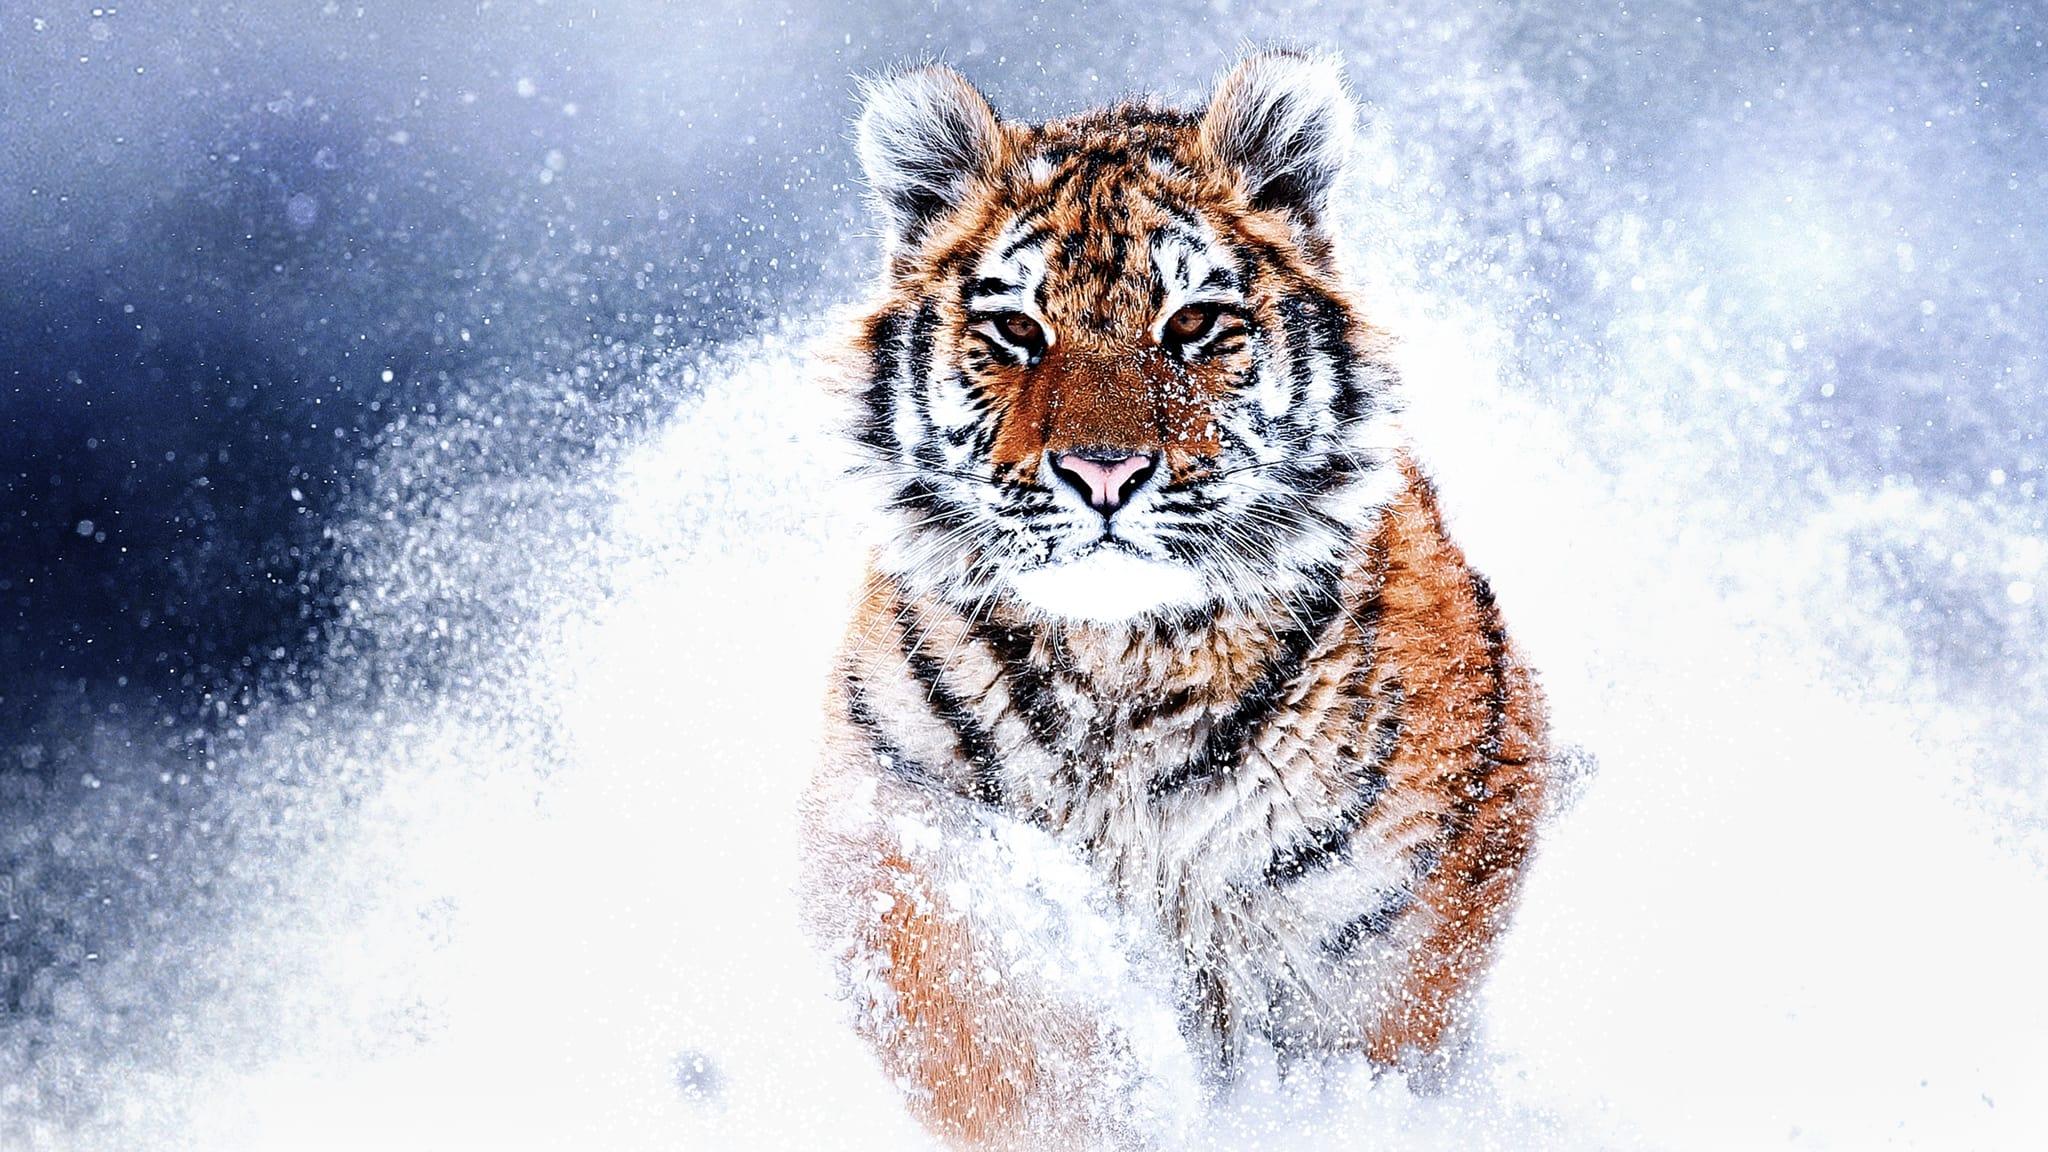 Russia's Wild Tiger backdrop